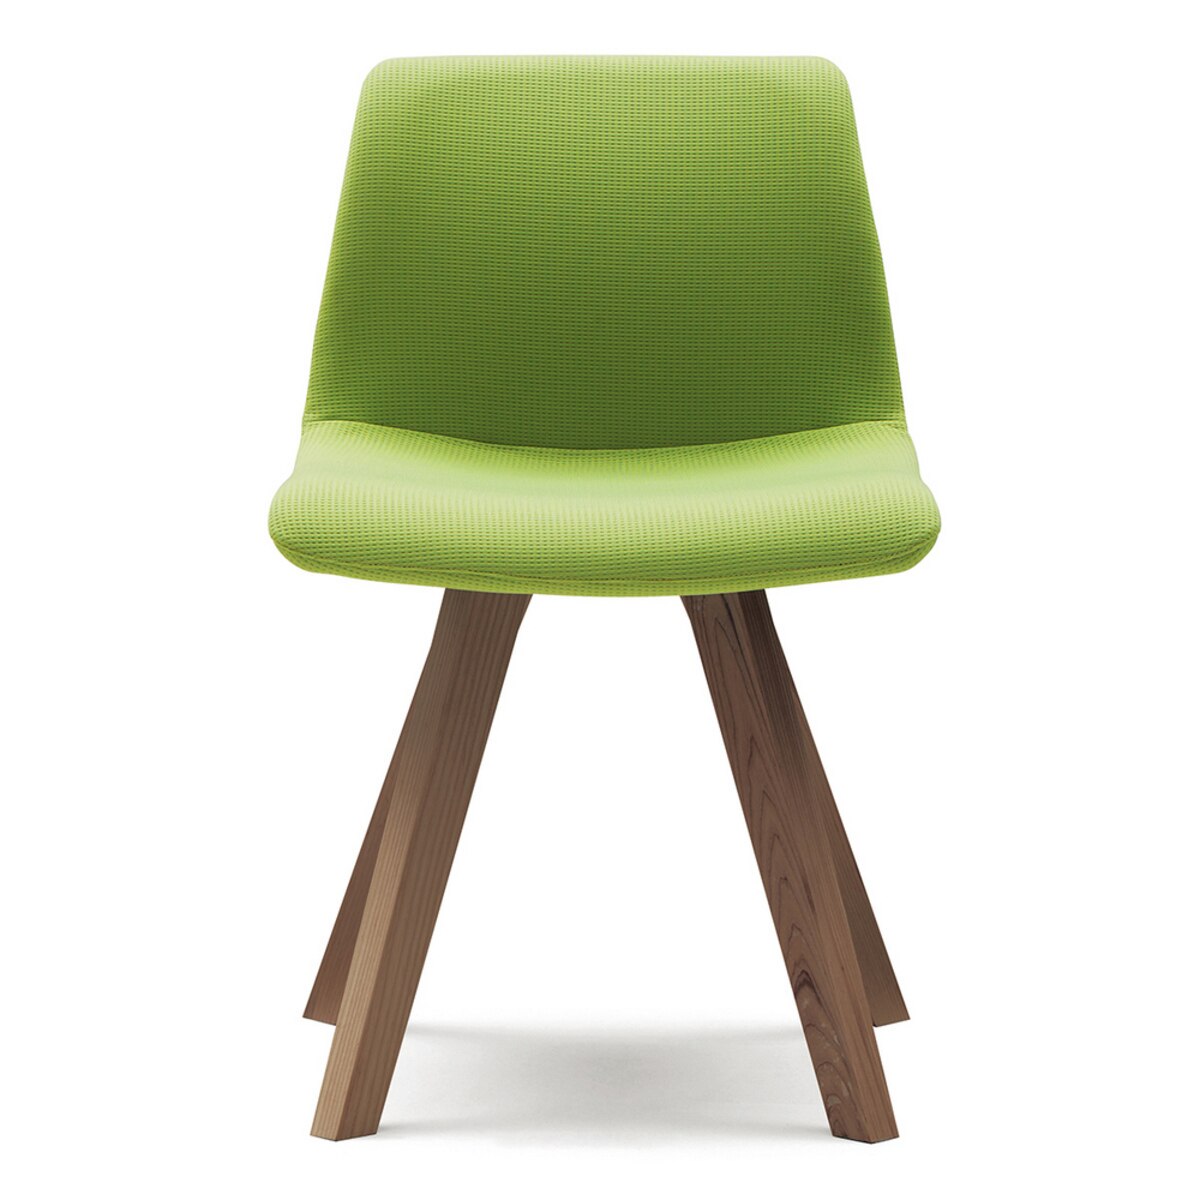 Sidiz Mane 原木布面椅 綠色